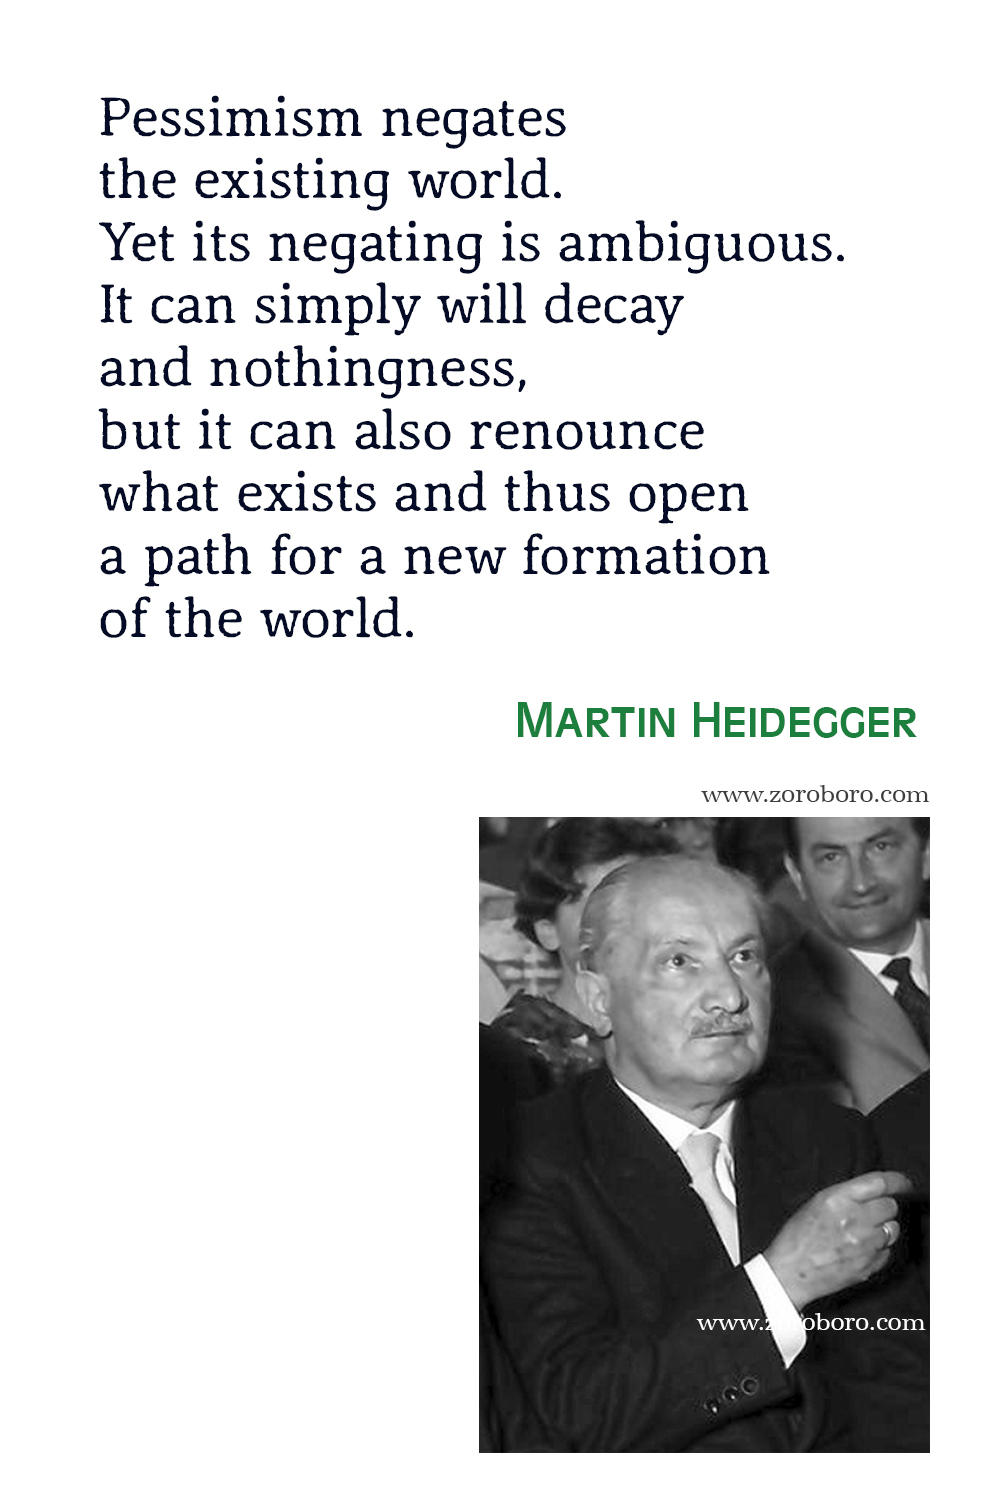 Martin Heidegger Quotes, Martin Heidegger Technology, Existentialism & Being and Time Quotes. Martin Heidegger Books Quotes